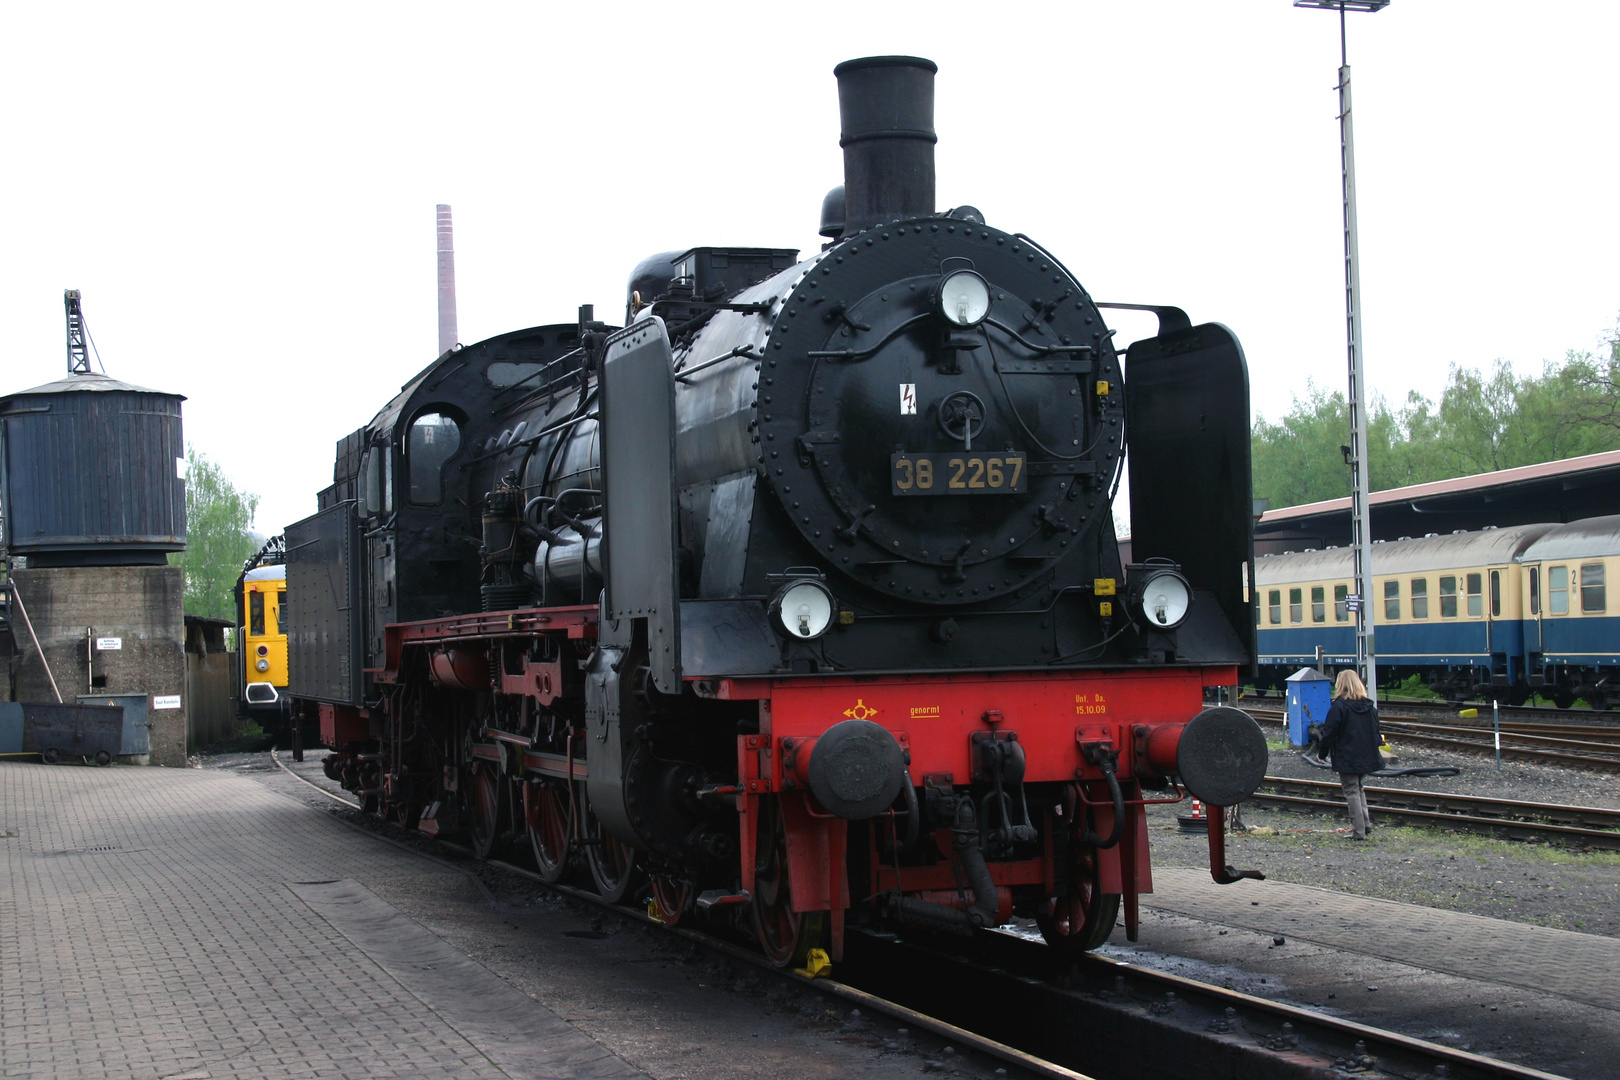 BR38 im Eisenbahnmuseum in Bochum Dahlhausen